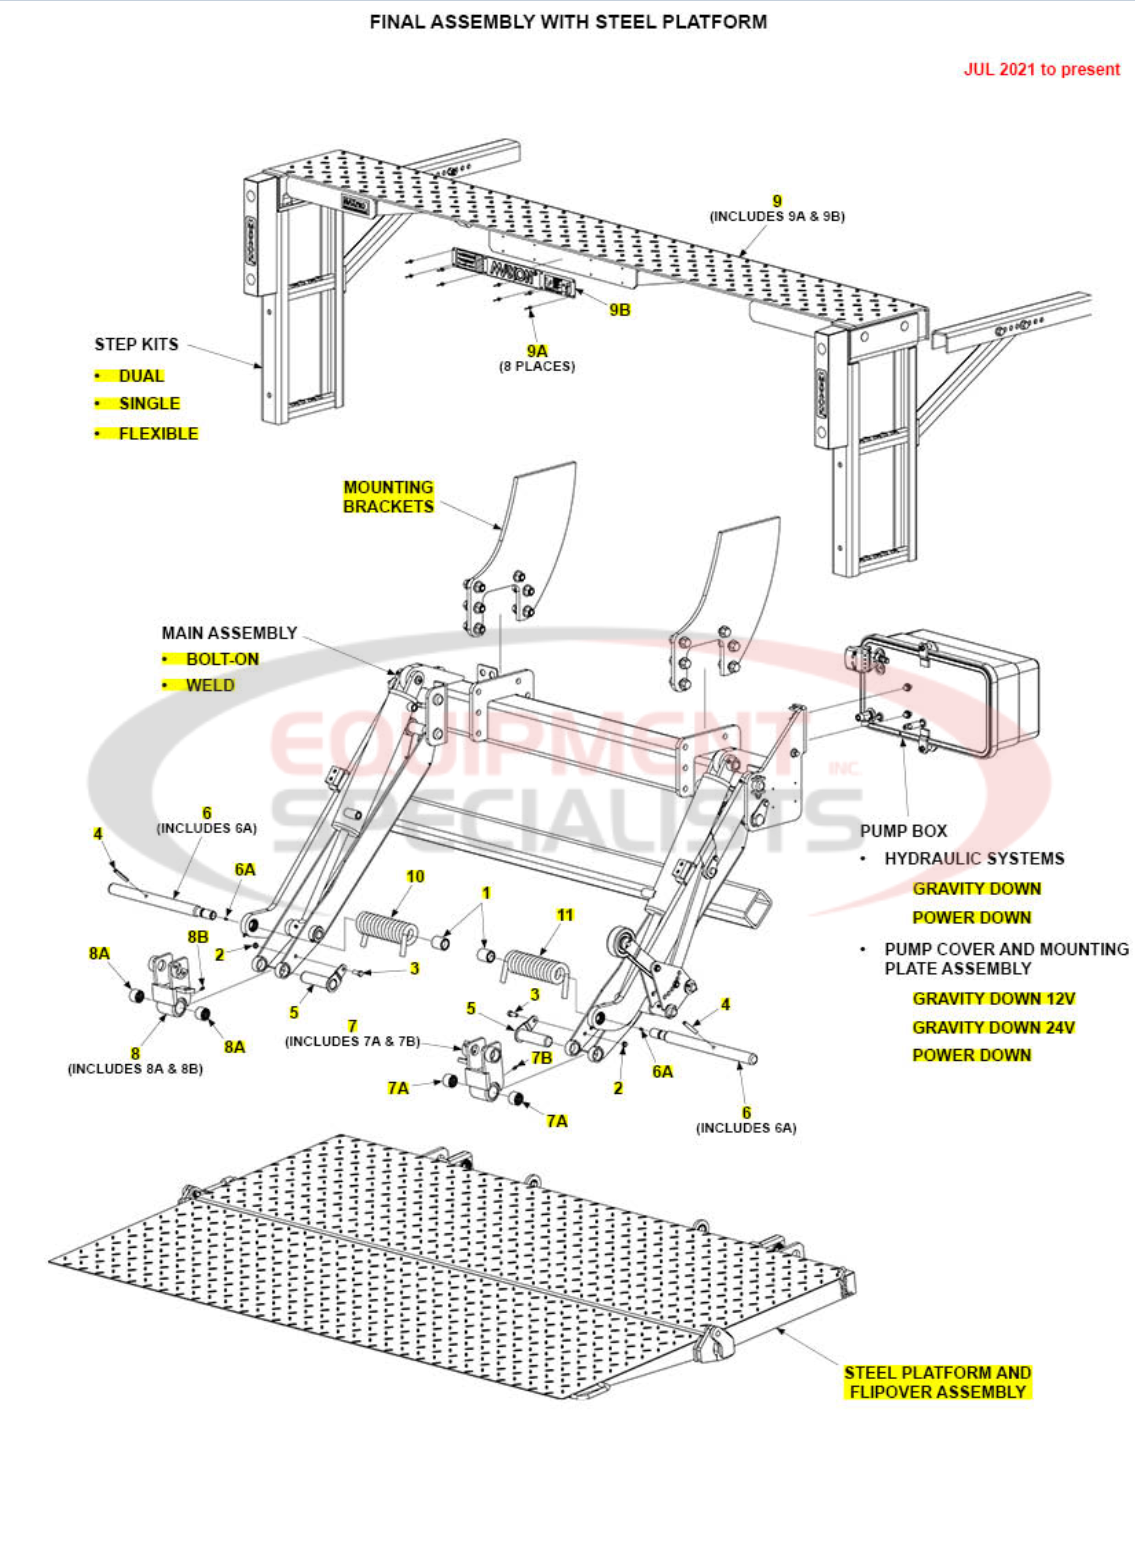 Maxon TE-33 Final Assembly with Steel Platform Jul 2021 to Present Parts Diagram Breakdown Diagram